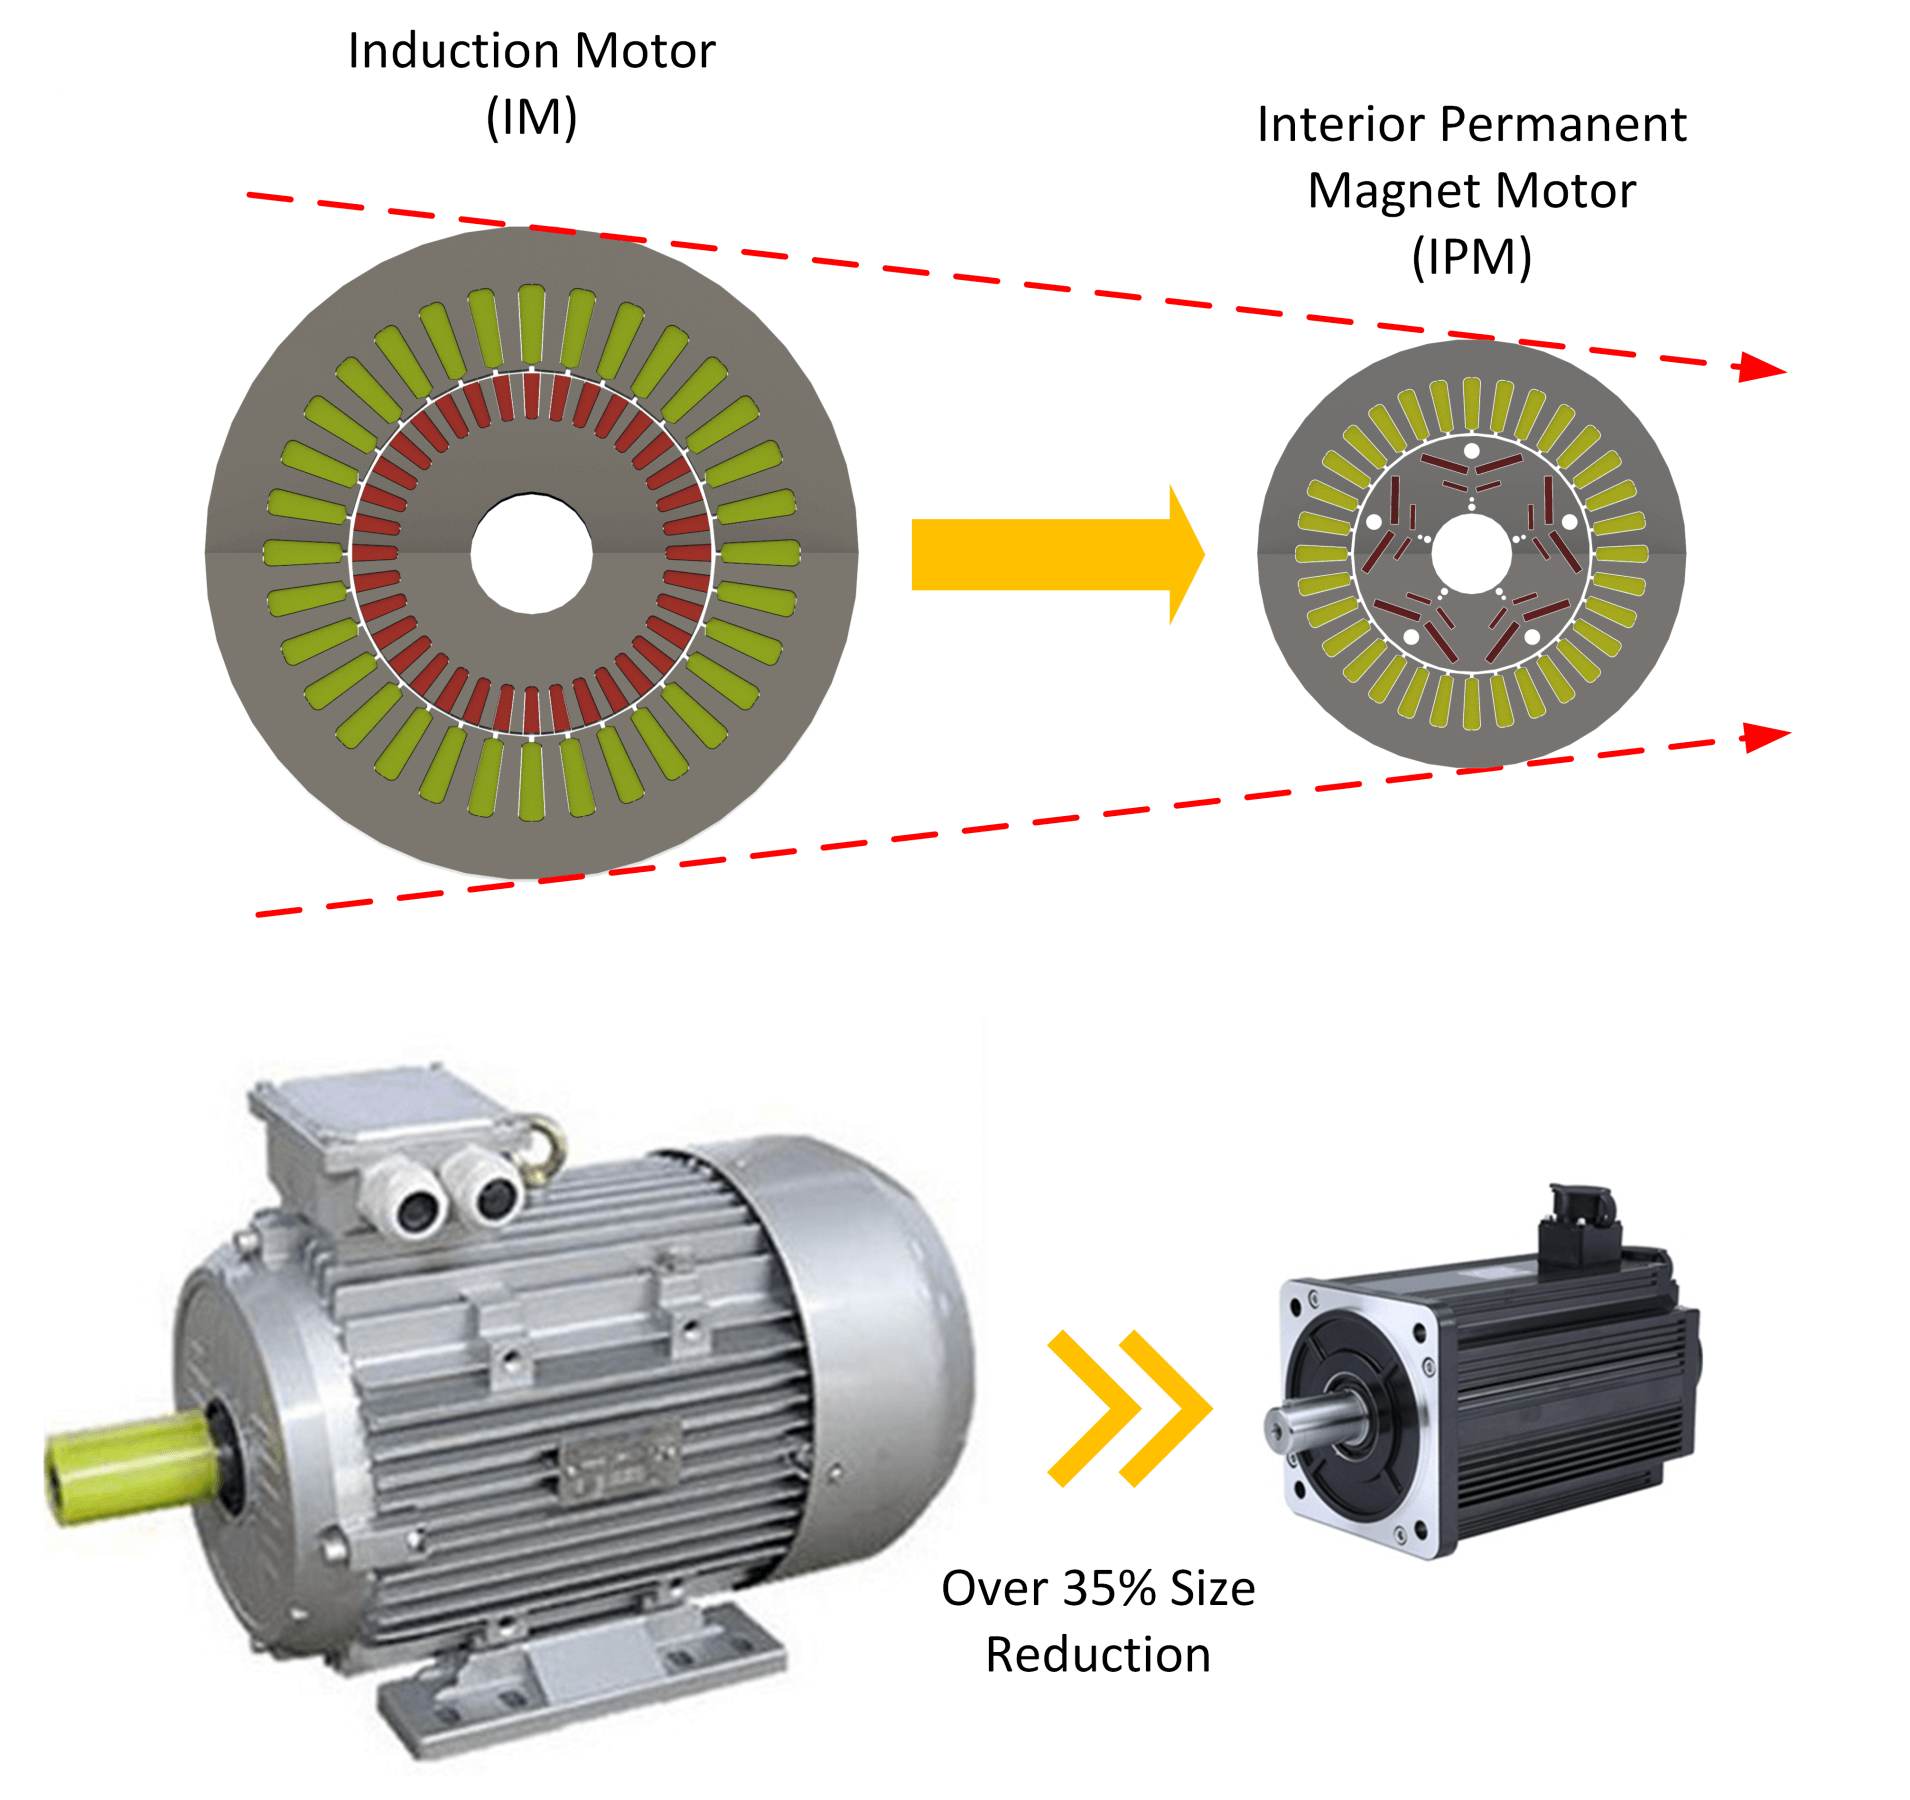 Induction motor versus permanent magnet motor size comparison